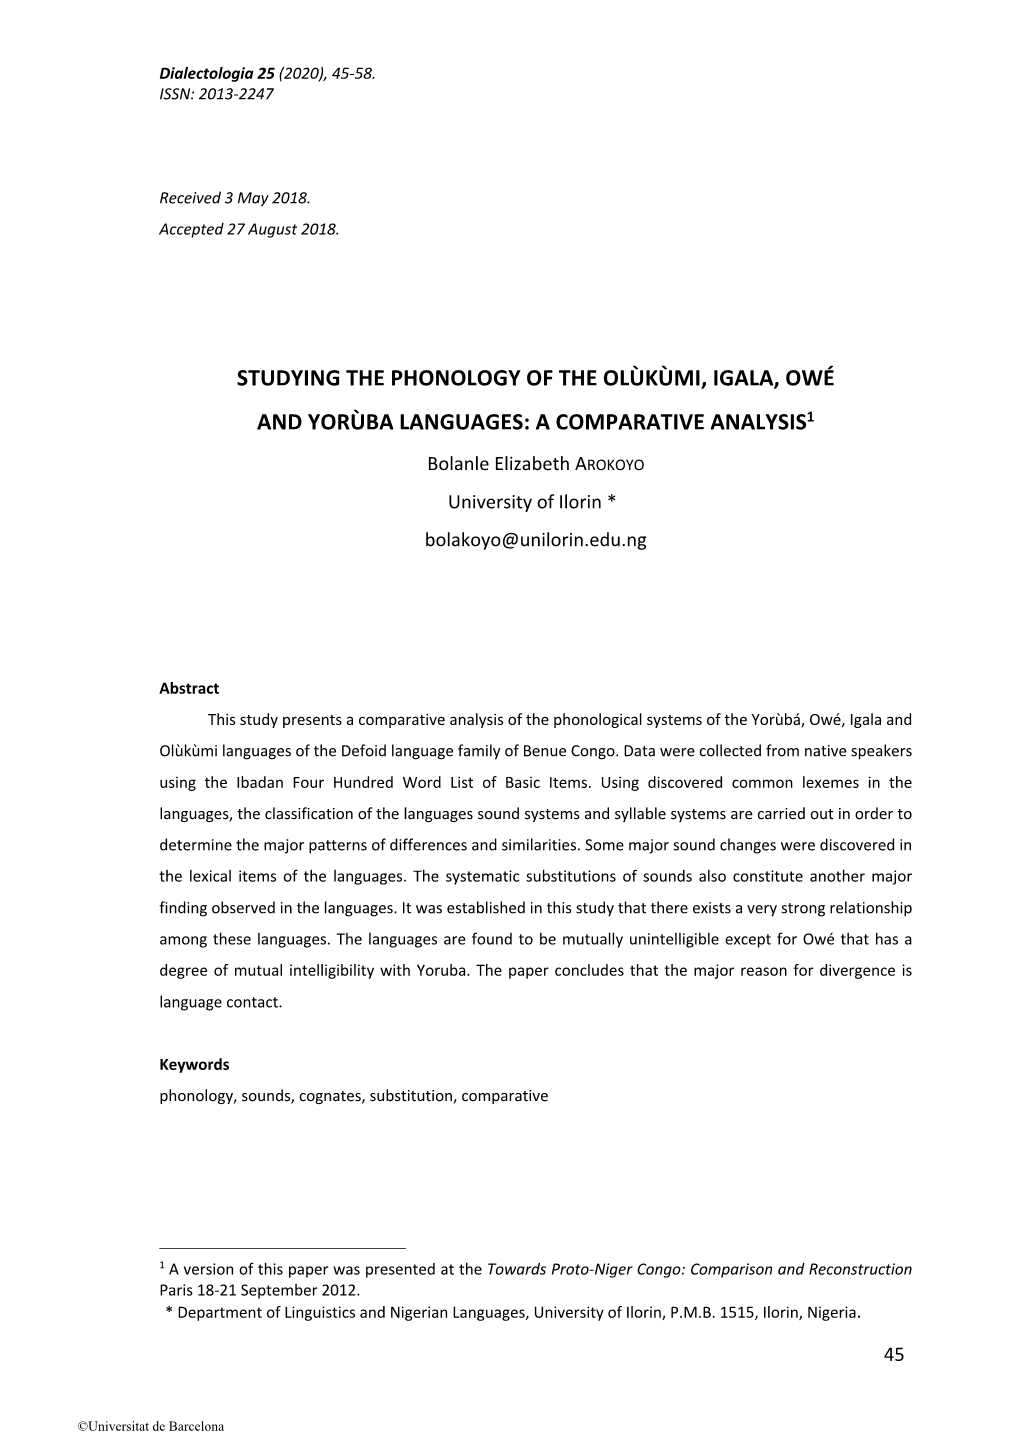 Studying the Phonology of the Olùkùmi, Igala, Owé and Yorùba Languages: a Comparative Analysis1